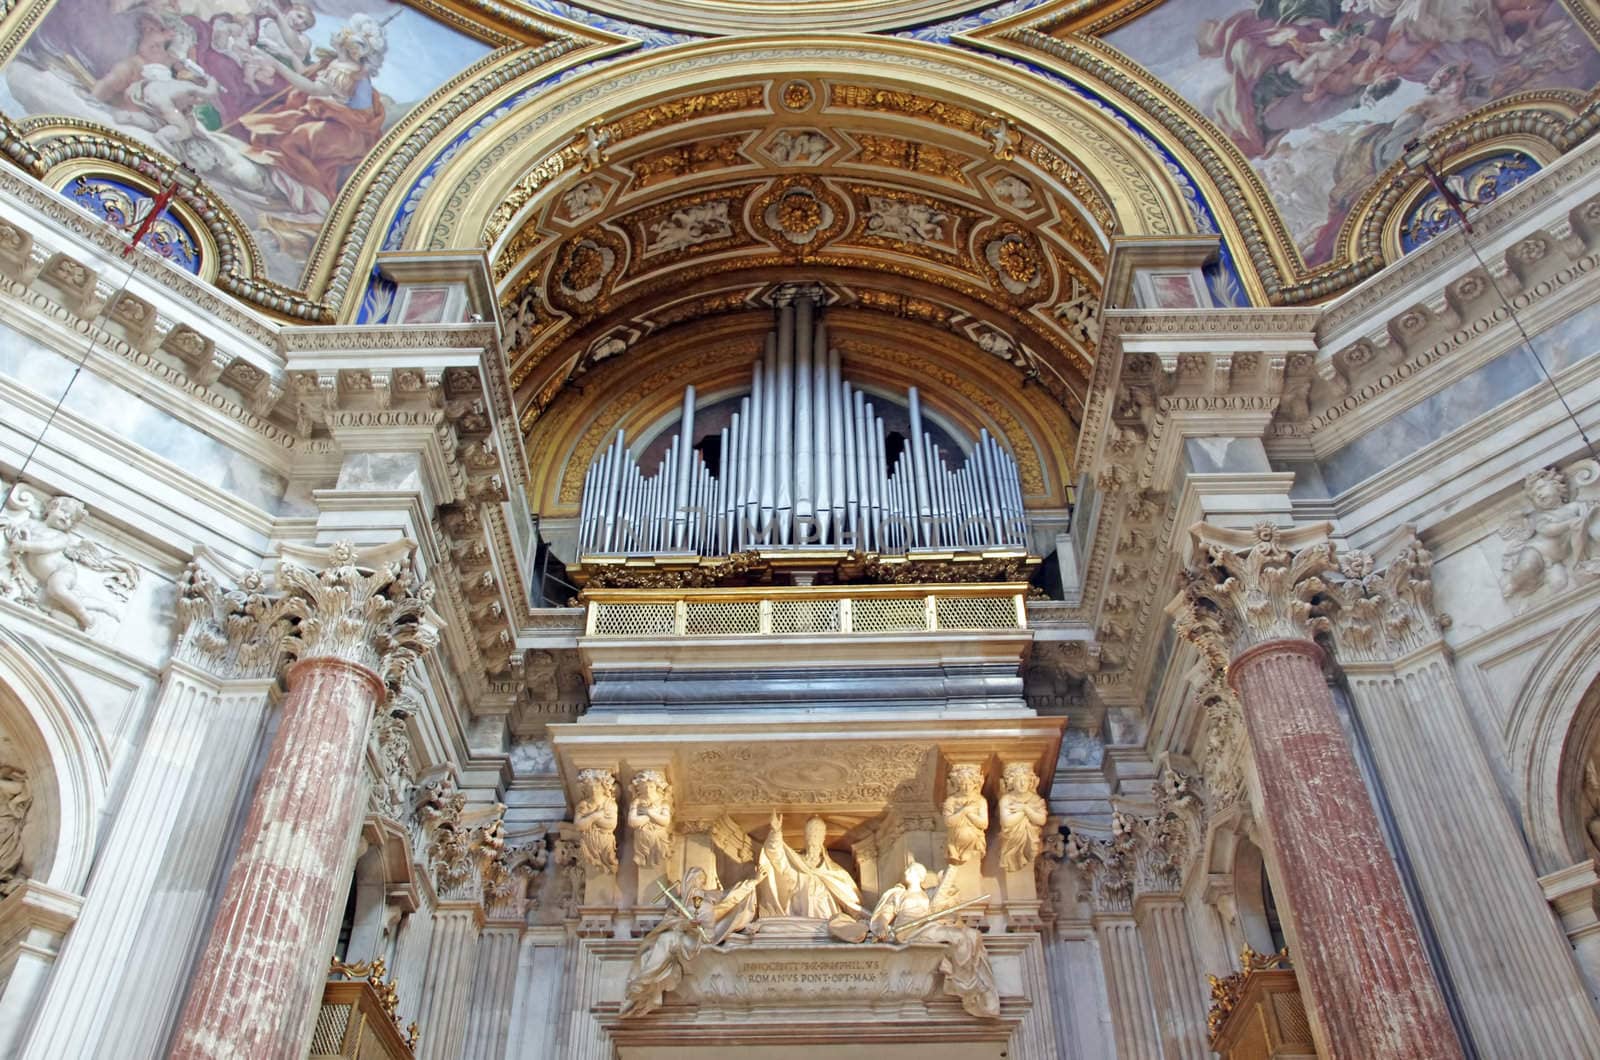 Catholic church organ in Sant'Agnese in Agone, Rome